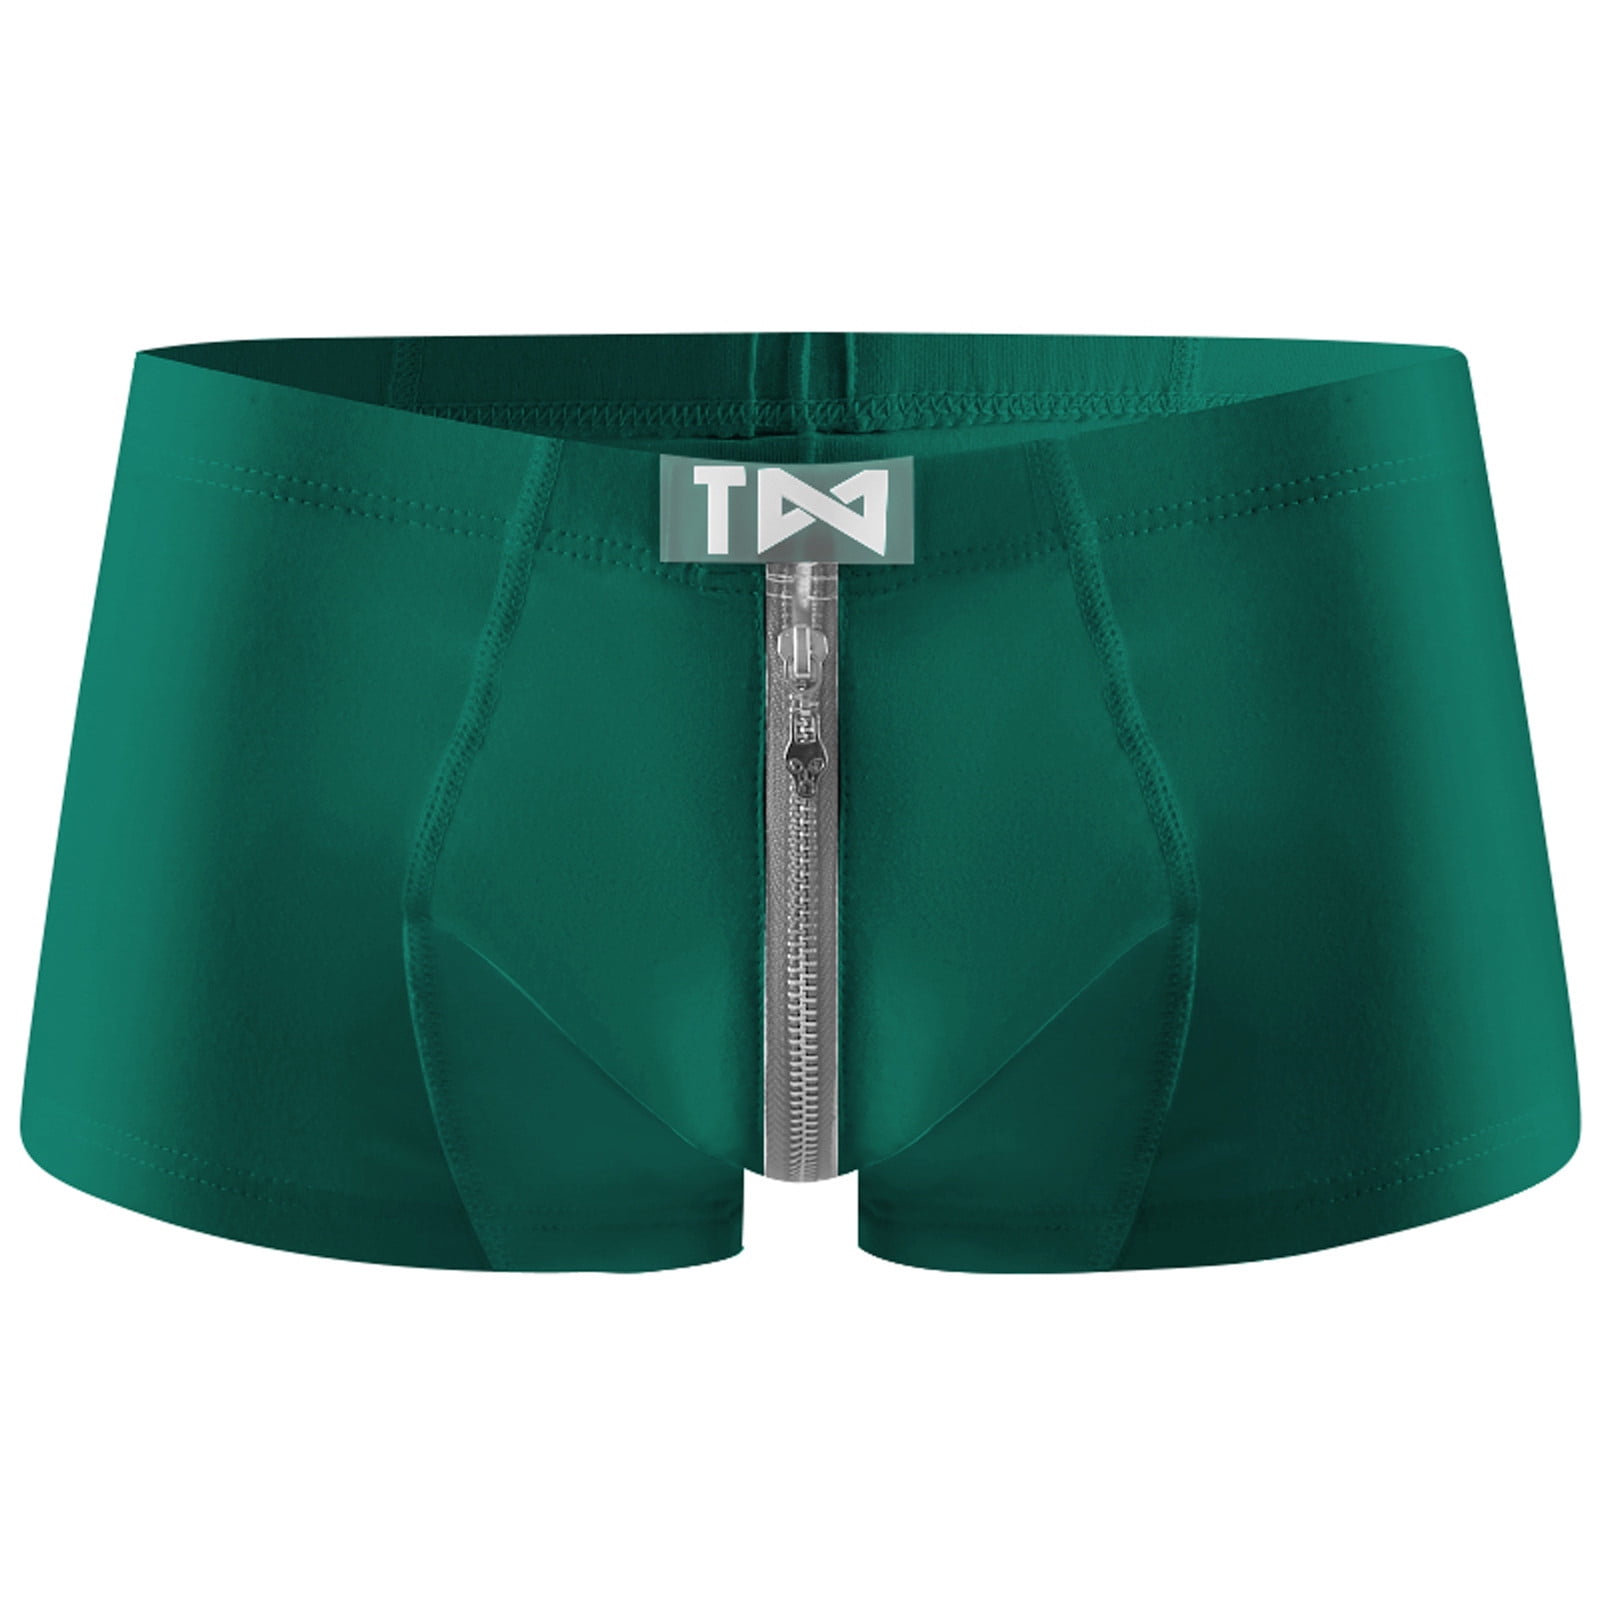 Boxers for Men Boxers Underpants Solid Black M 1-Pack 